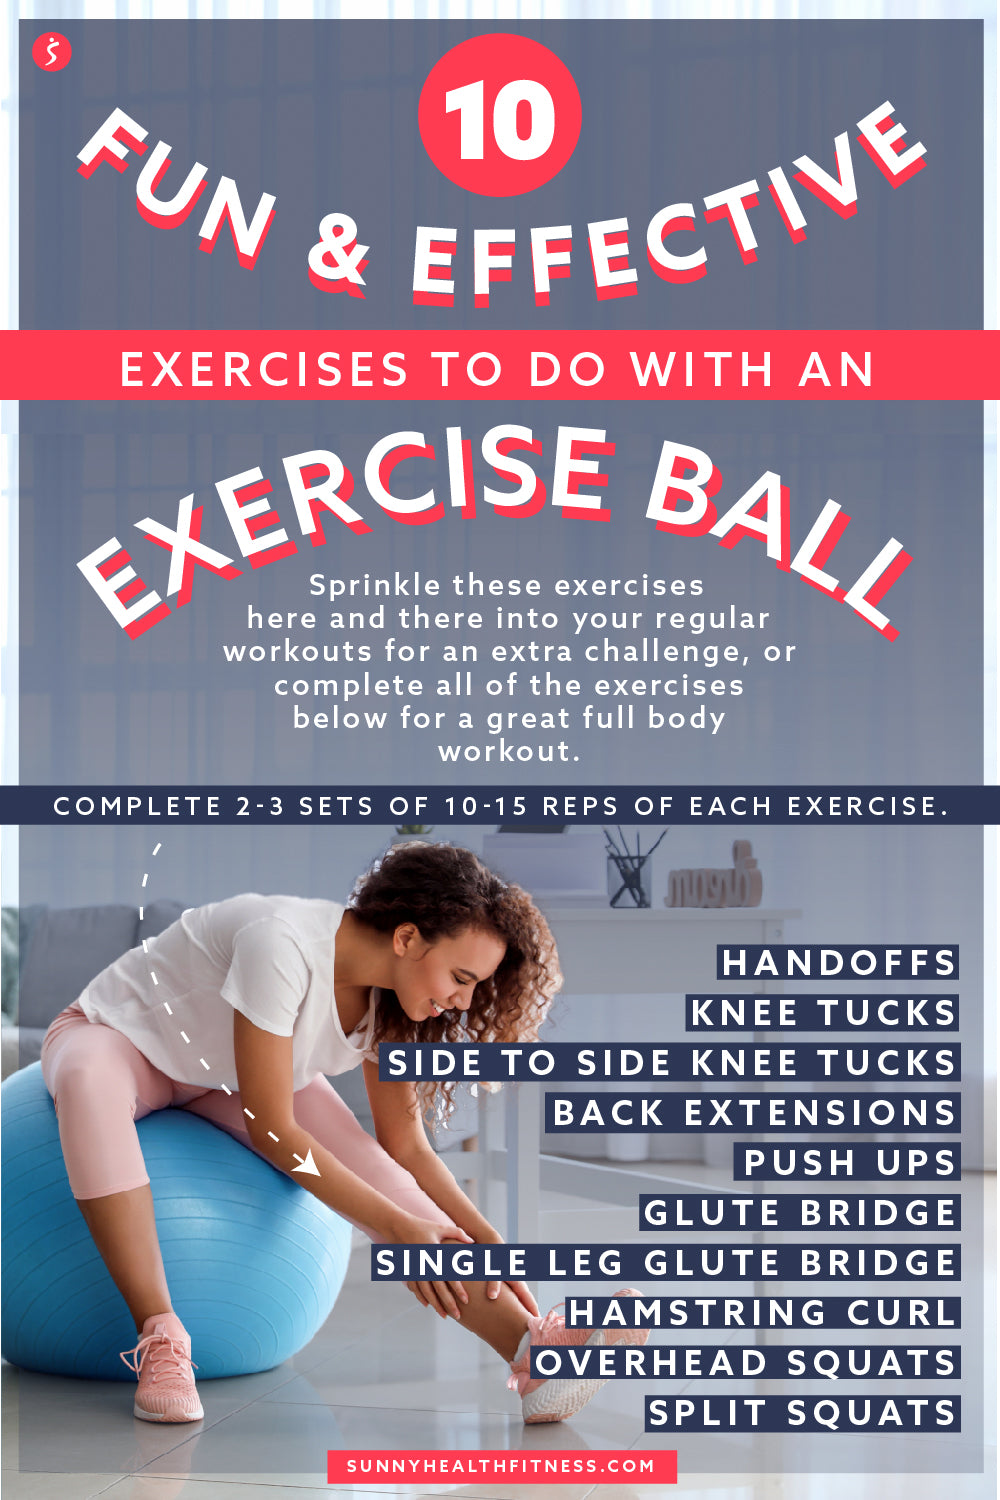 5 Simple Yoga Ball Exercises - MIT Recreation